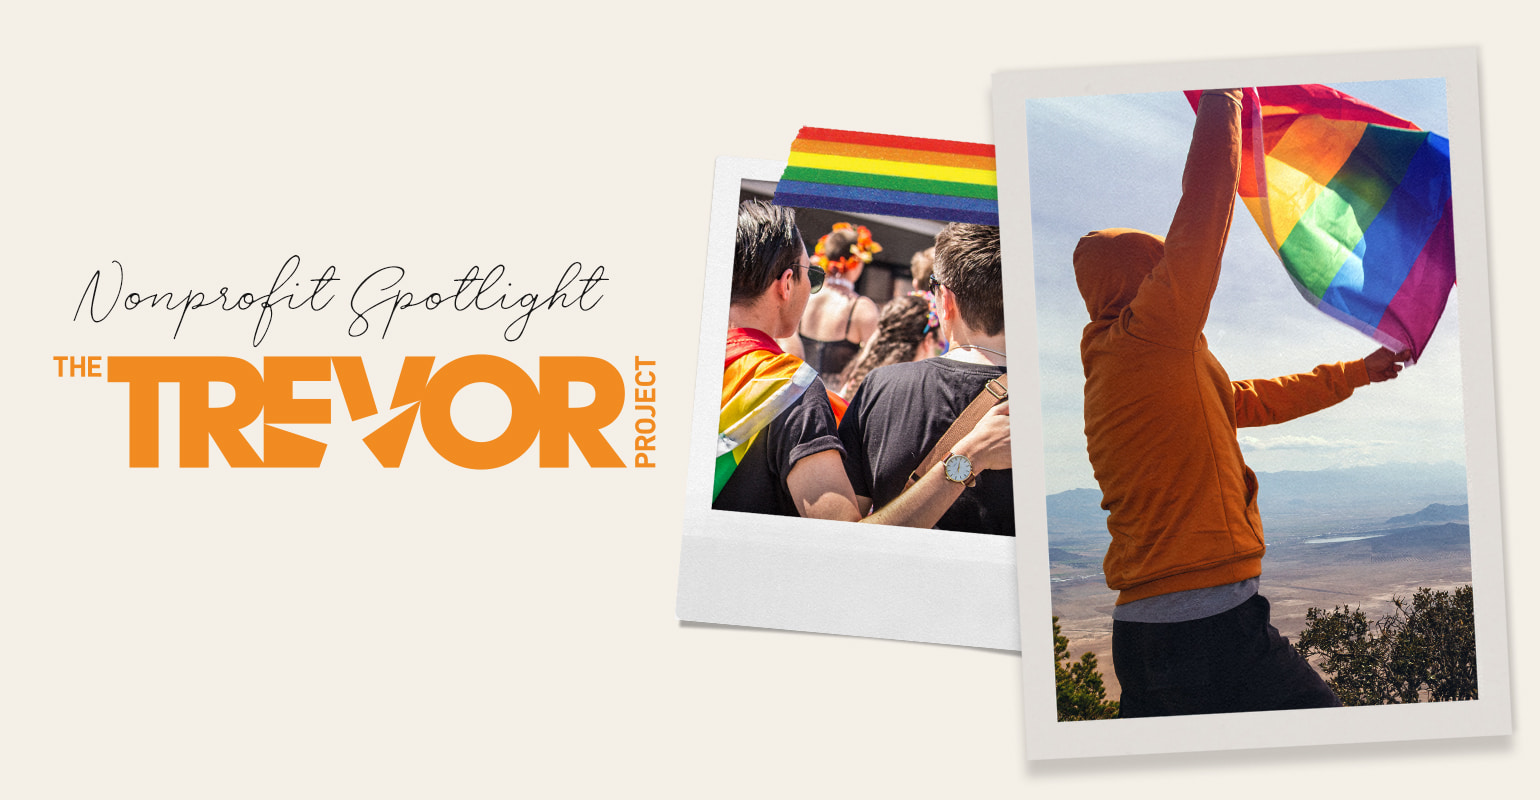 The Trevor Project Nonprofit Spotlight